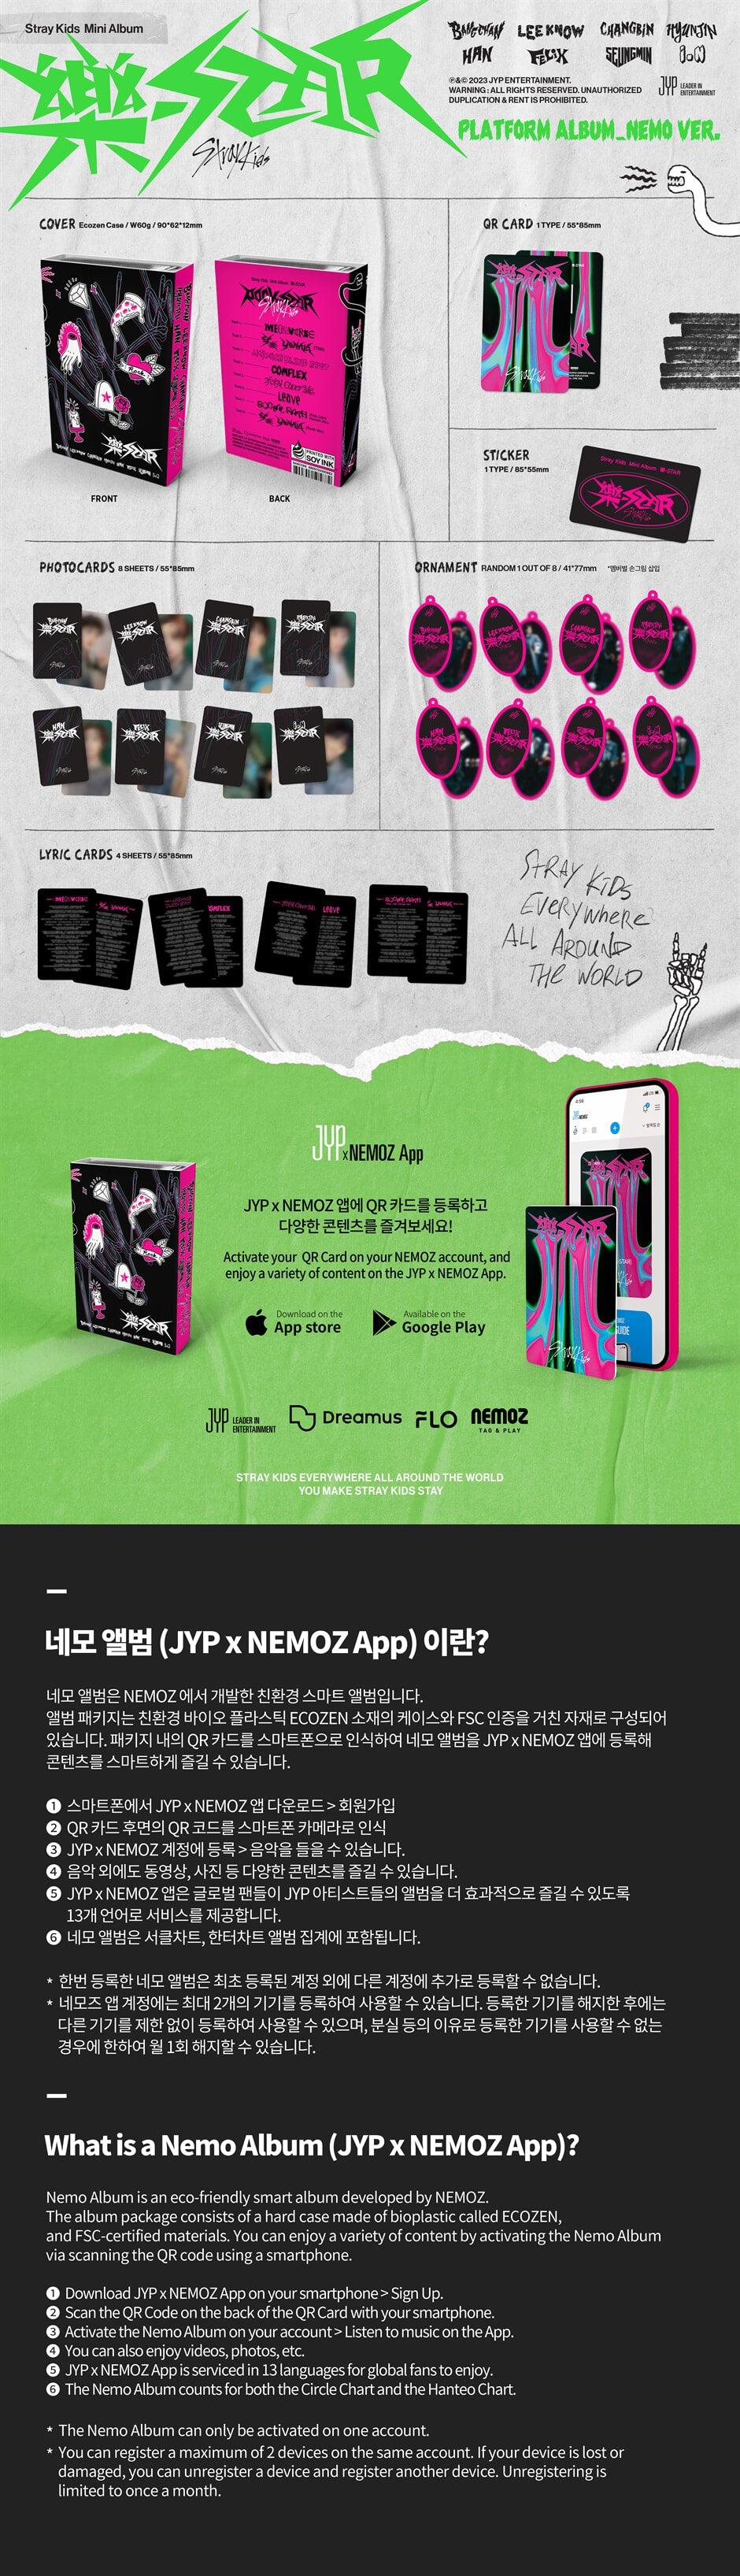 Stray Kids Mini Album – 樂-STAR [Rockstar] (PLATFORM ALBUM) (NEMO Ver.) + JYP SHOP Benefit - KKANG